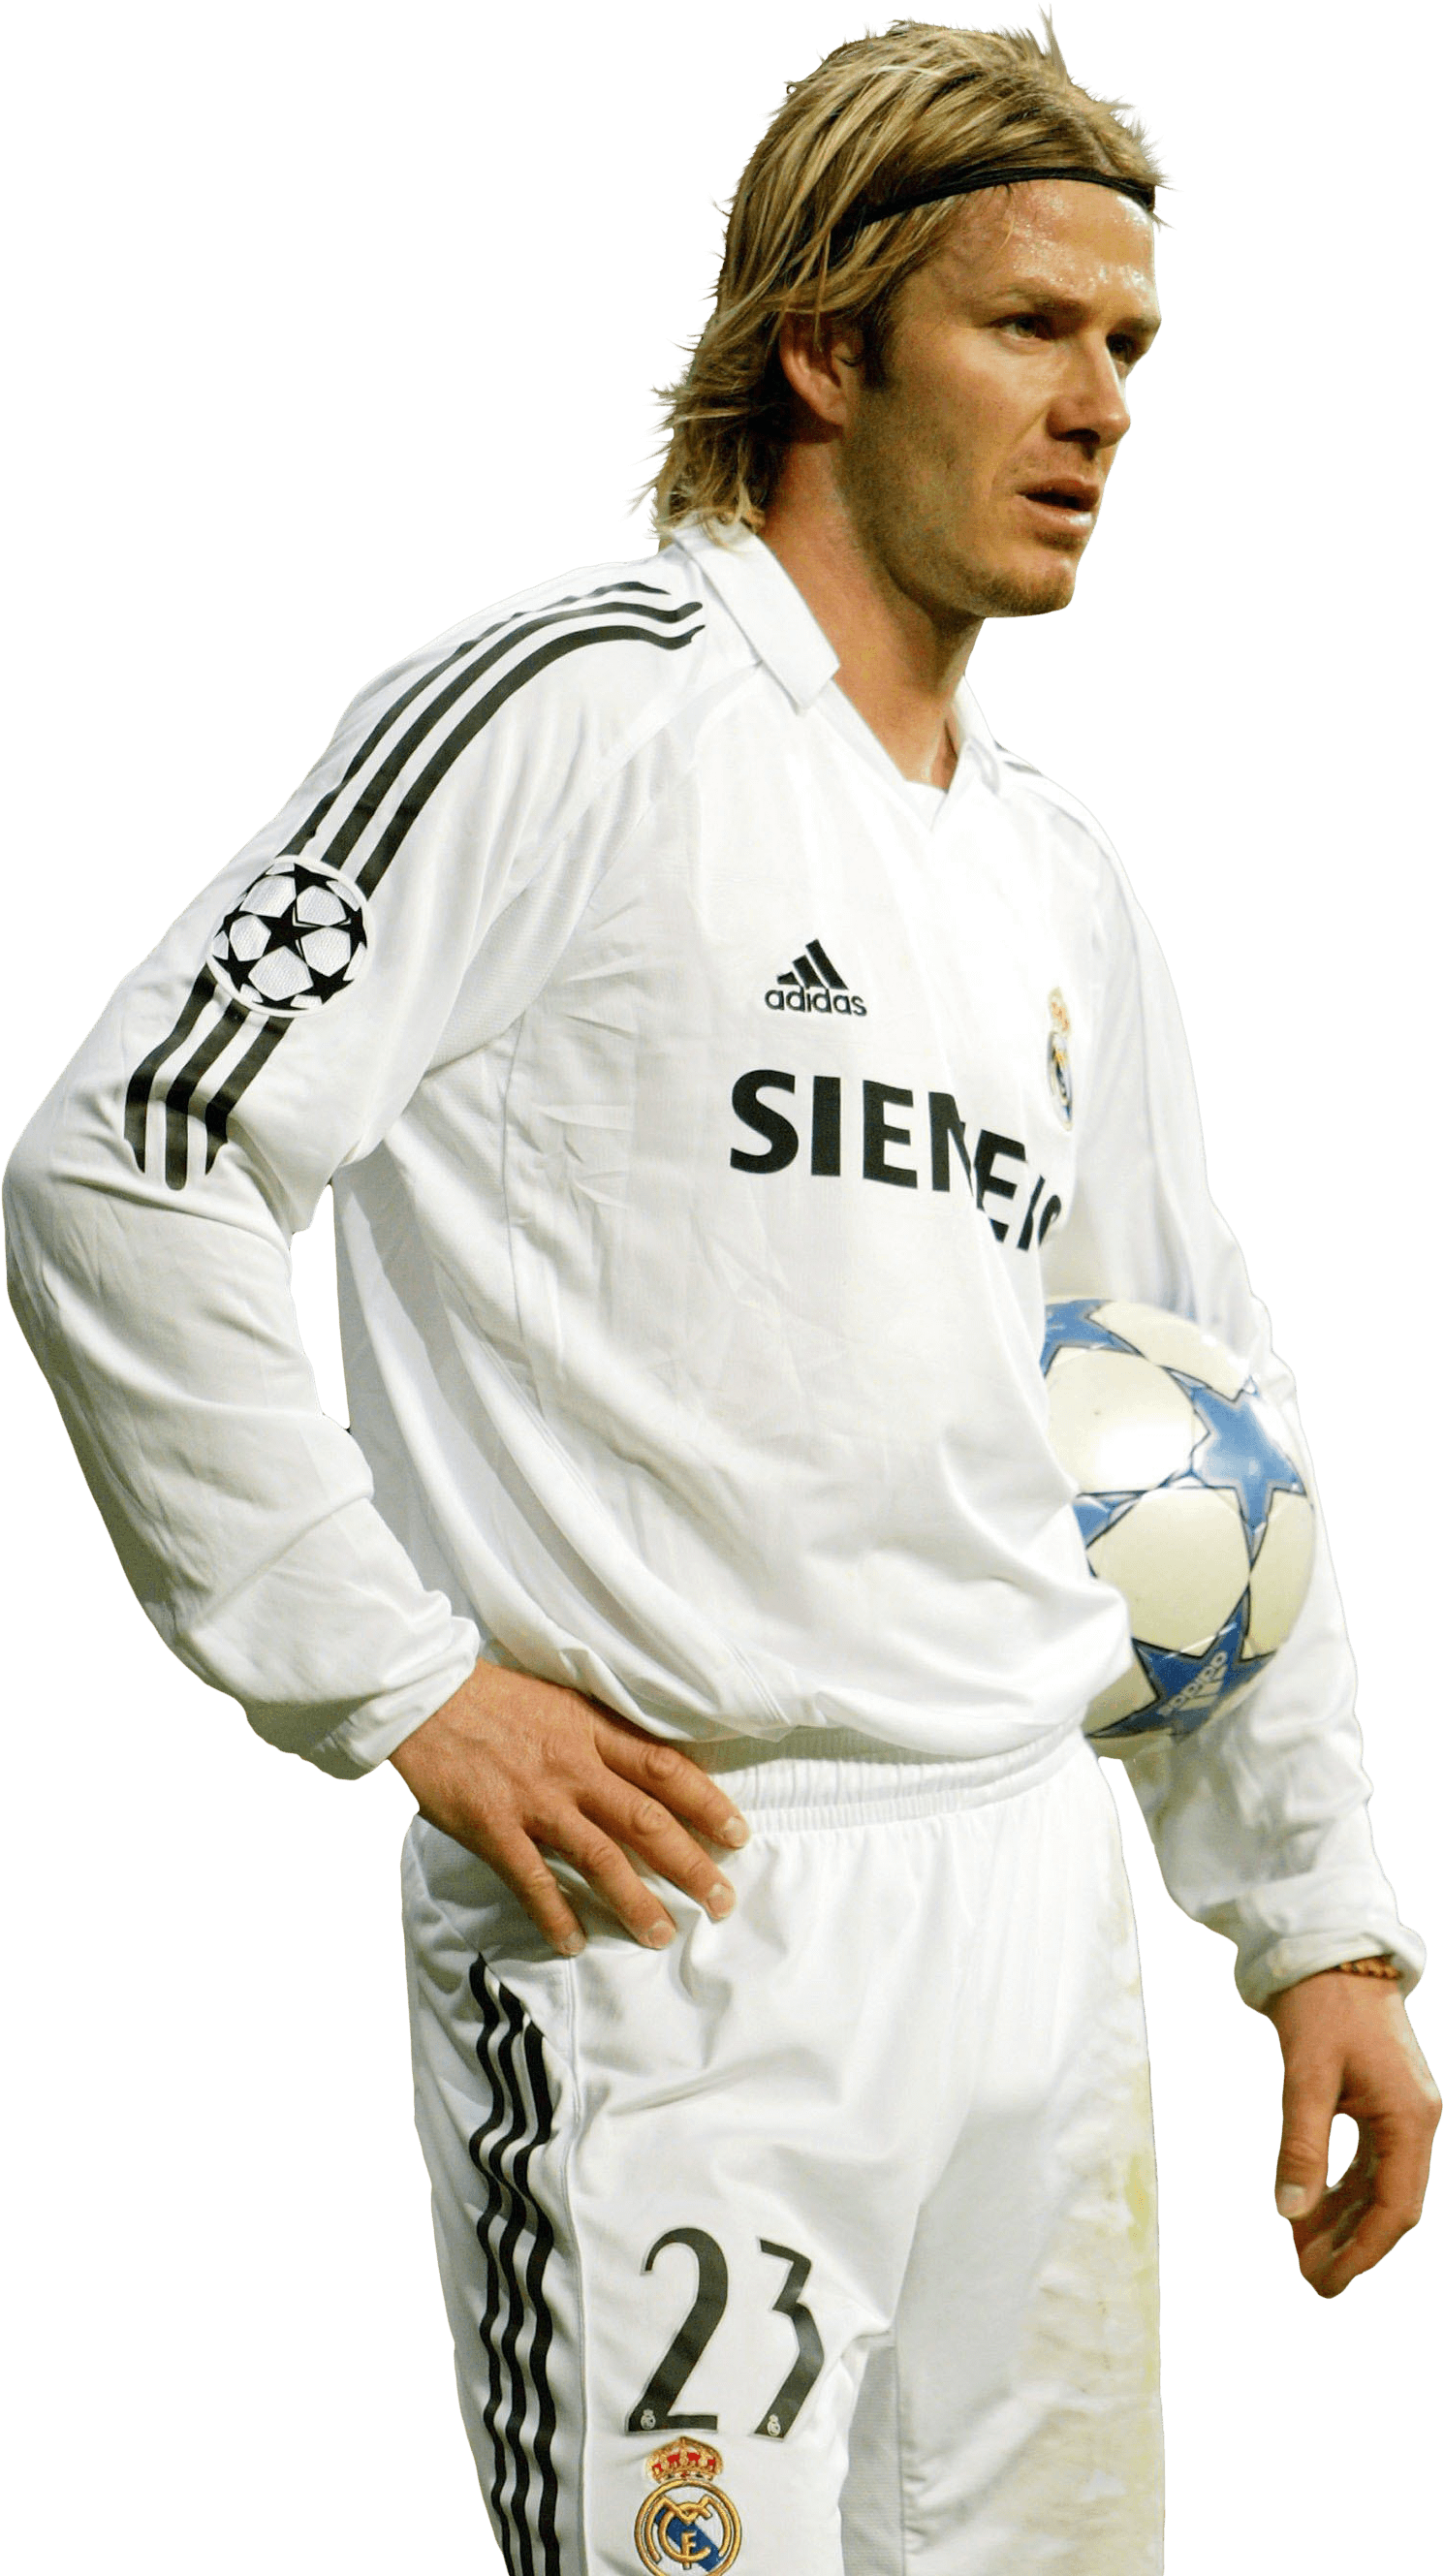 David Beckham Legends Football Render Footyrenders - vrogue.co